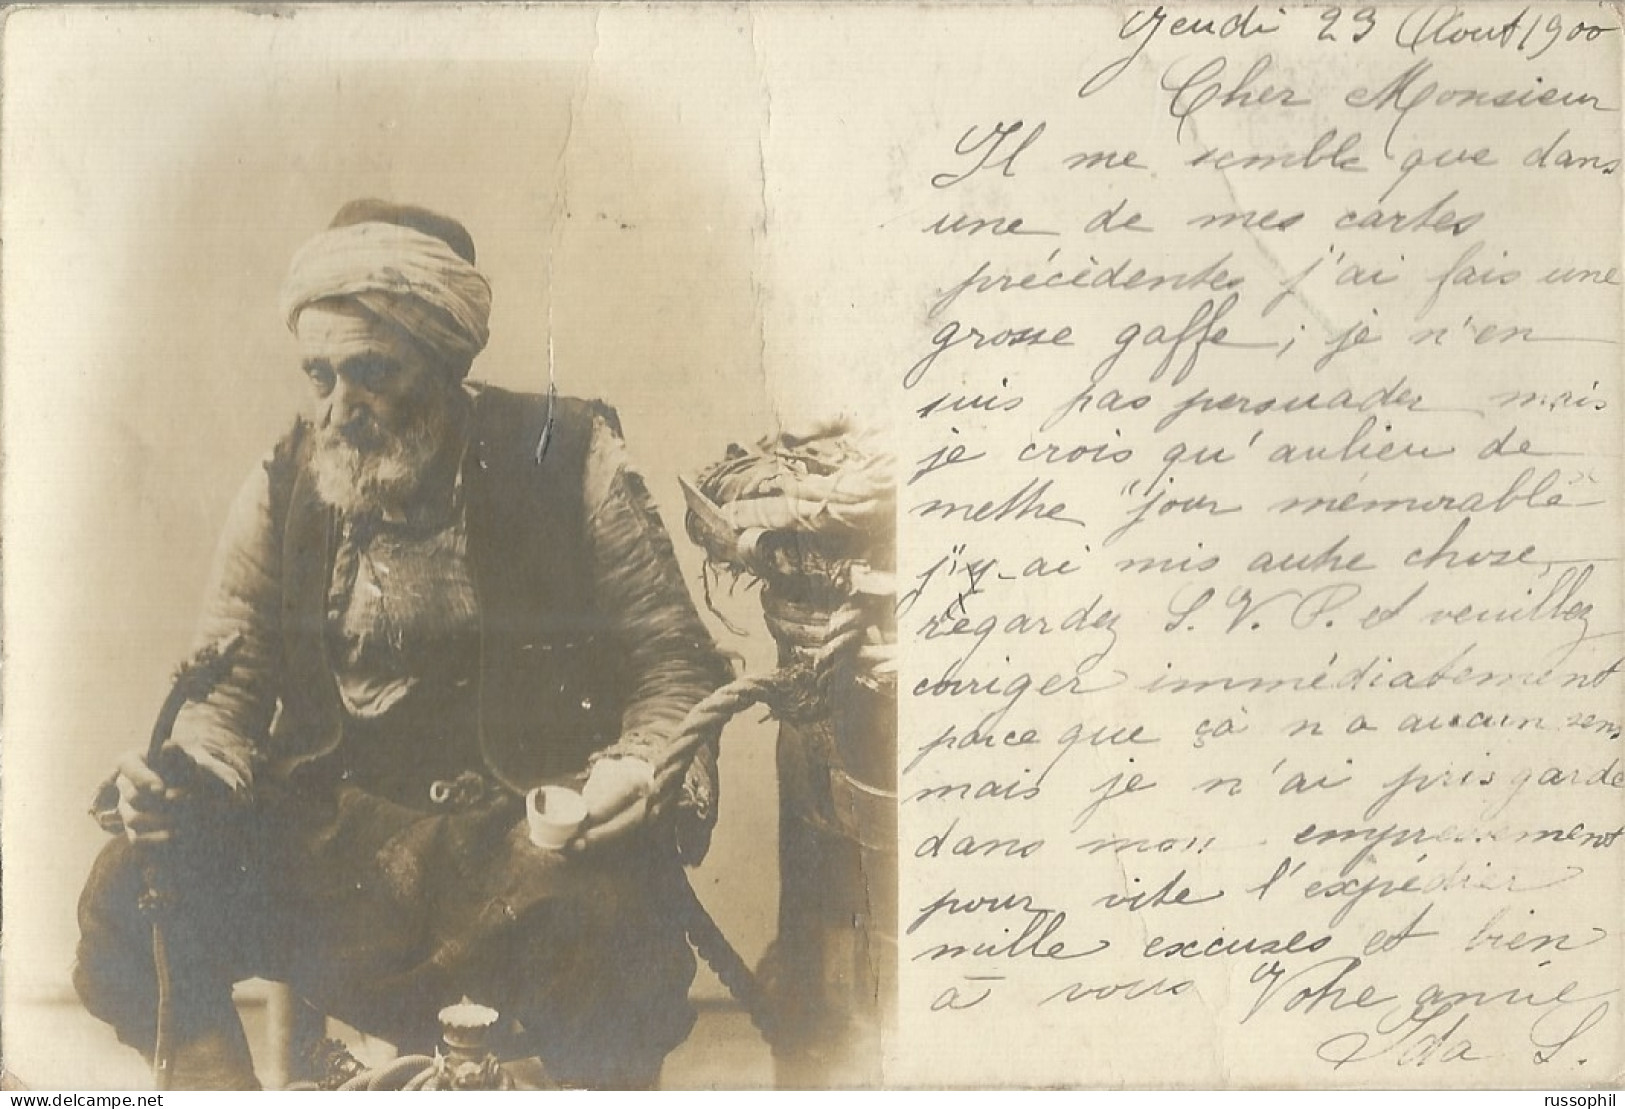 TURKIYE - PHOTOCARD - STREET SCENE  - SAT OLD MAN SMOKING AND DRINKING COFFEE  - 1900 - Turkey